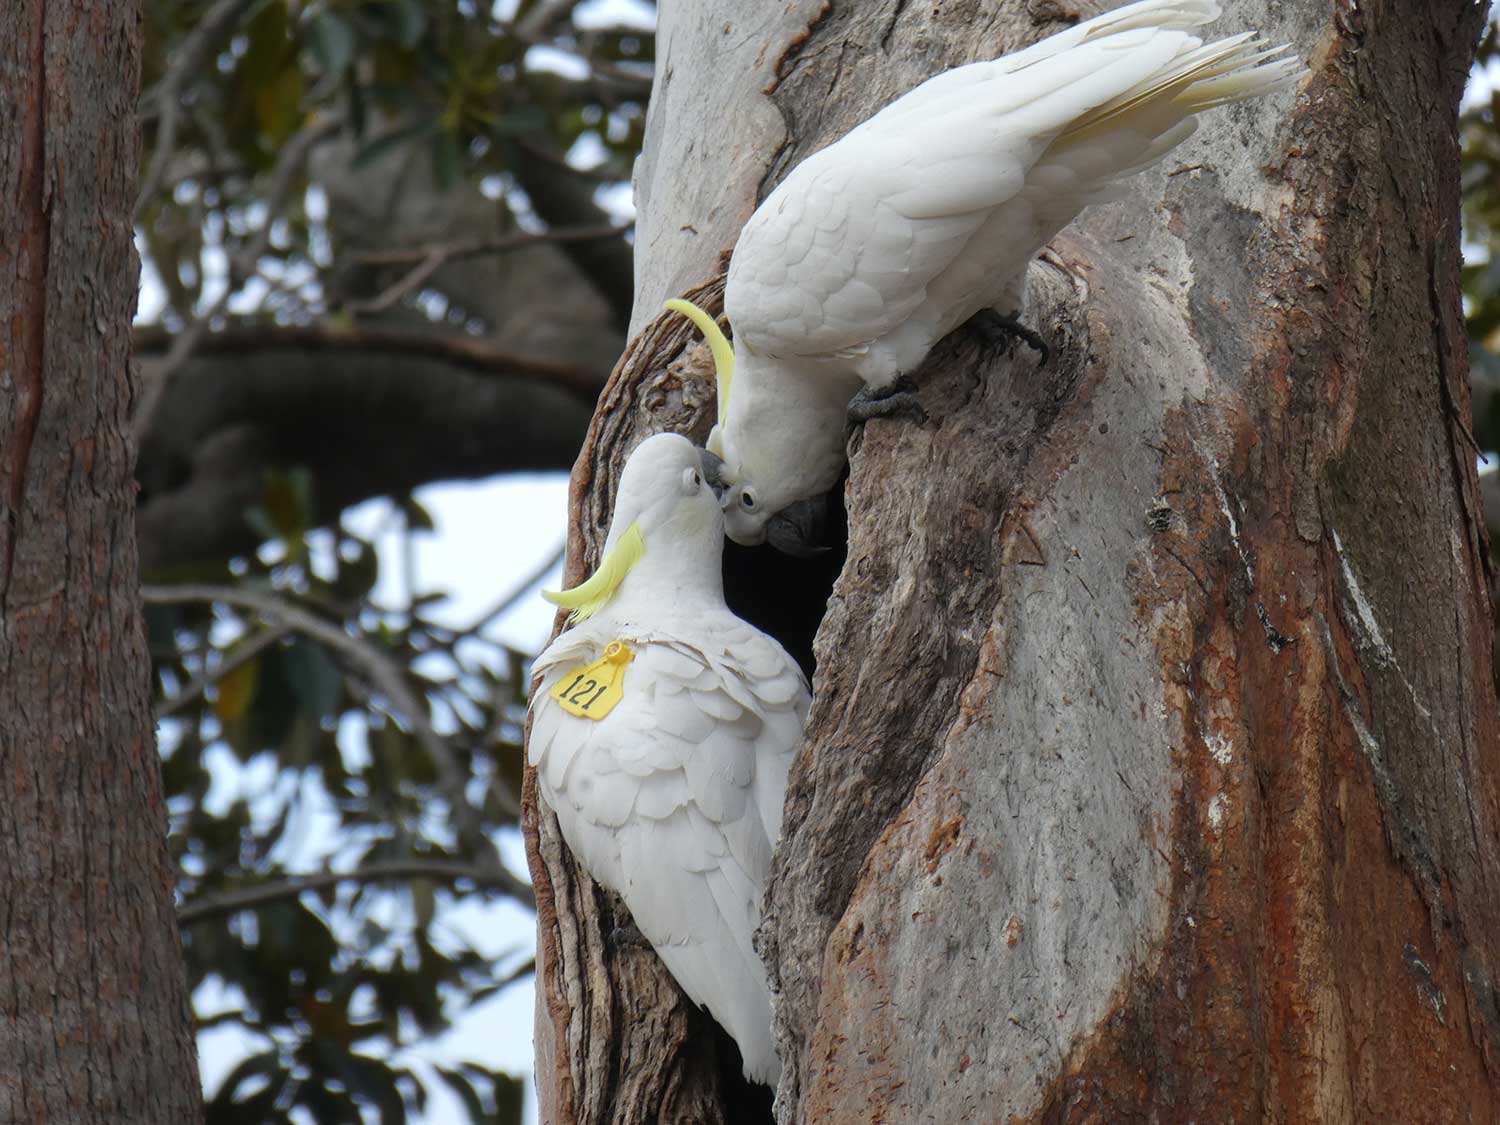 'Roberta' (121), a wing-tagged Sulphur-crested Cockatoo. Photo credit - Dr. John Martin